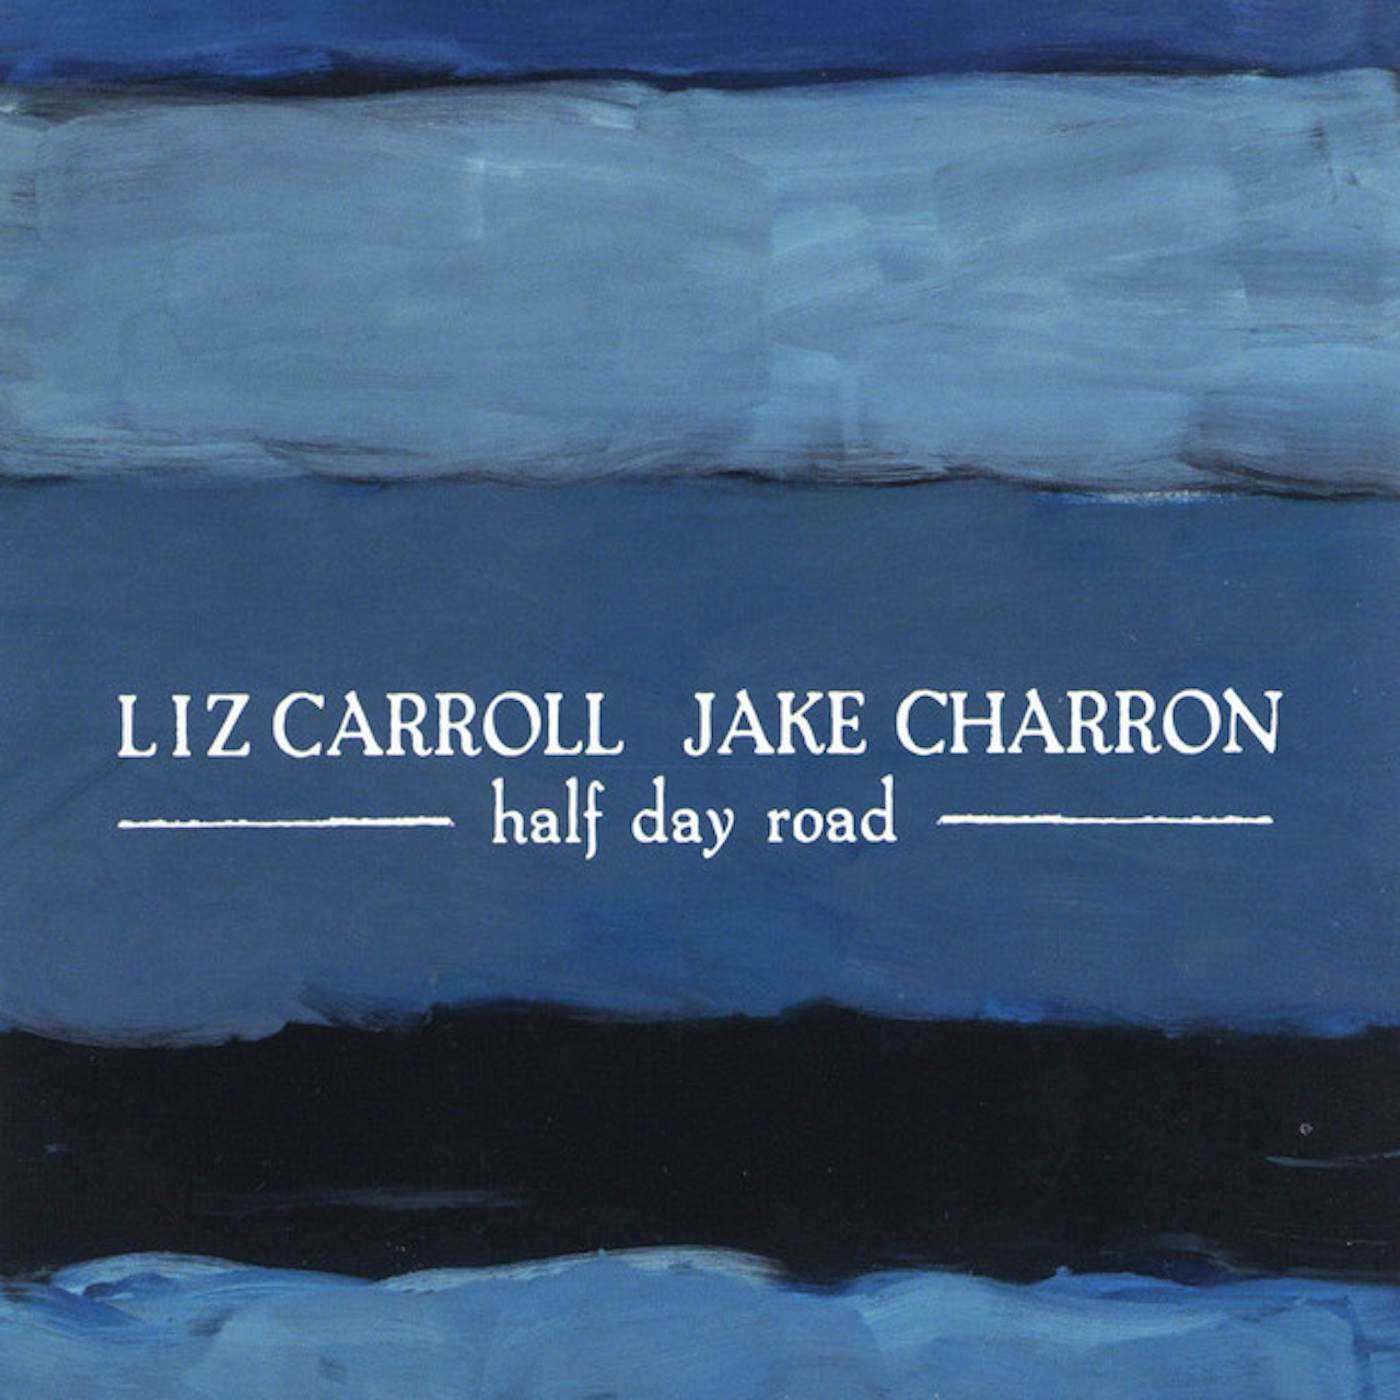 Liz Carroll HALF DAY ROAD CD